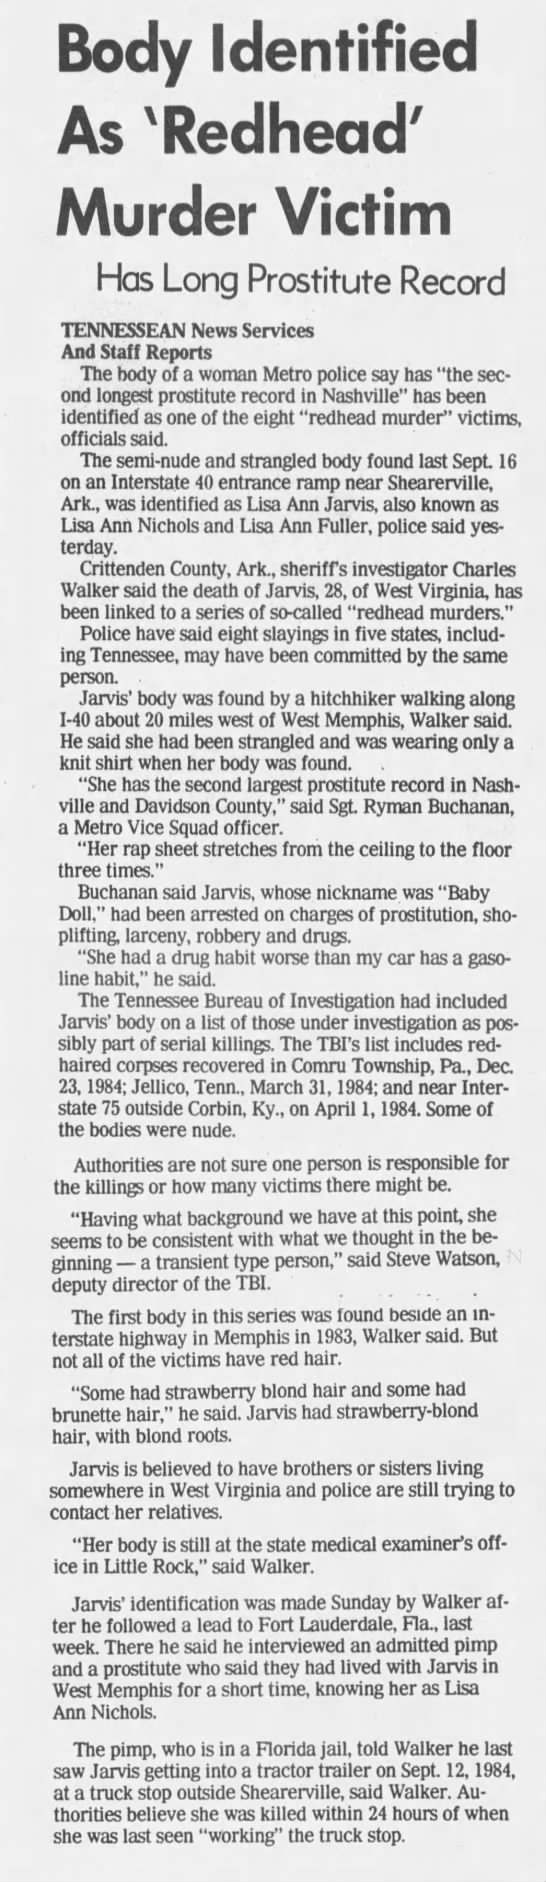 June 26, 1985 "Body Identified As 'Redhead' Murder Victim" - 